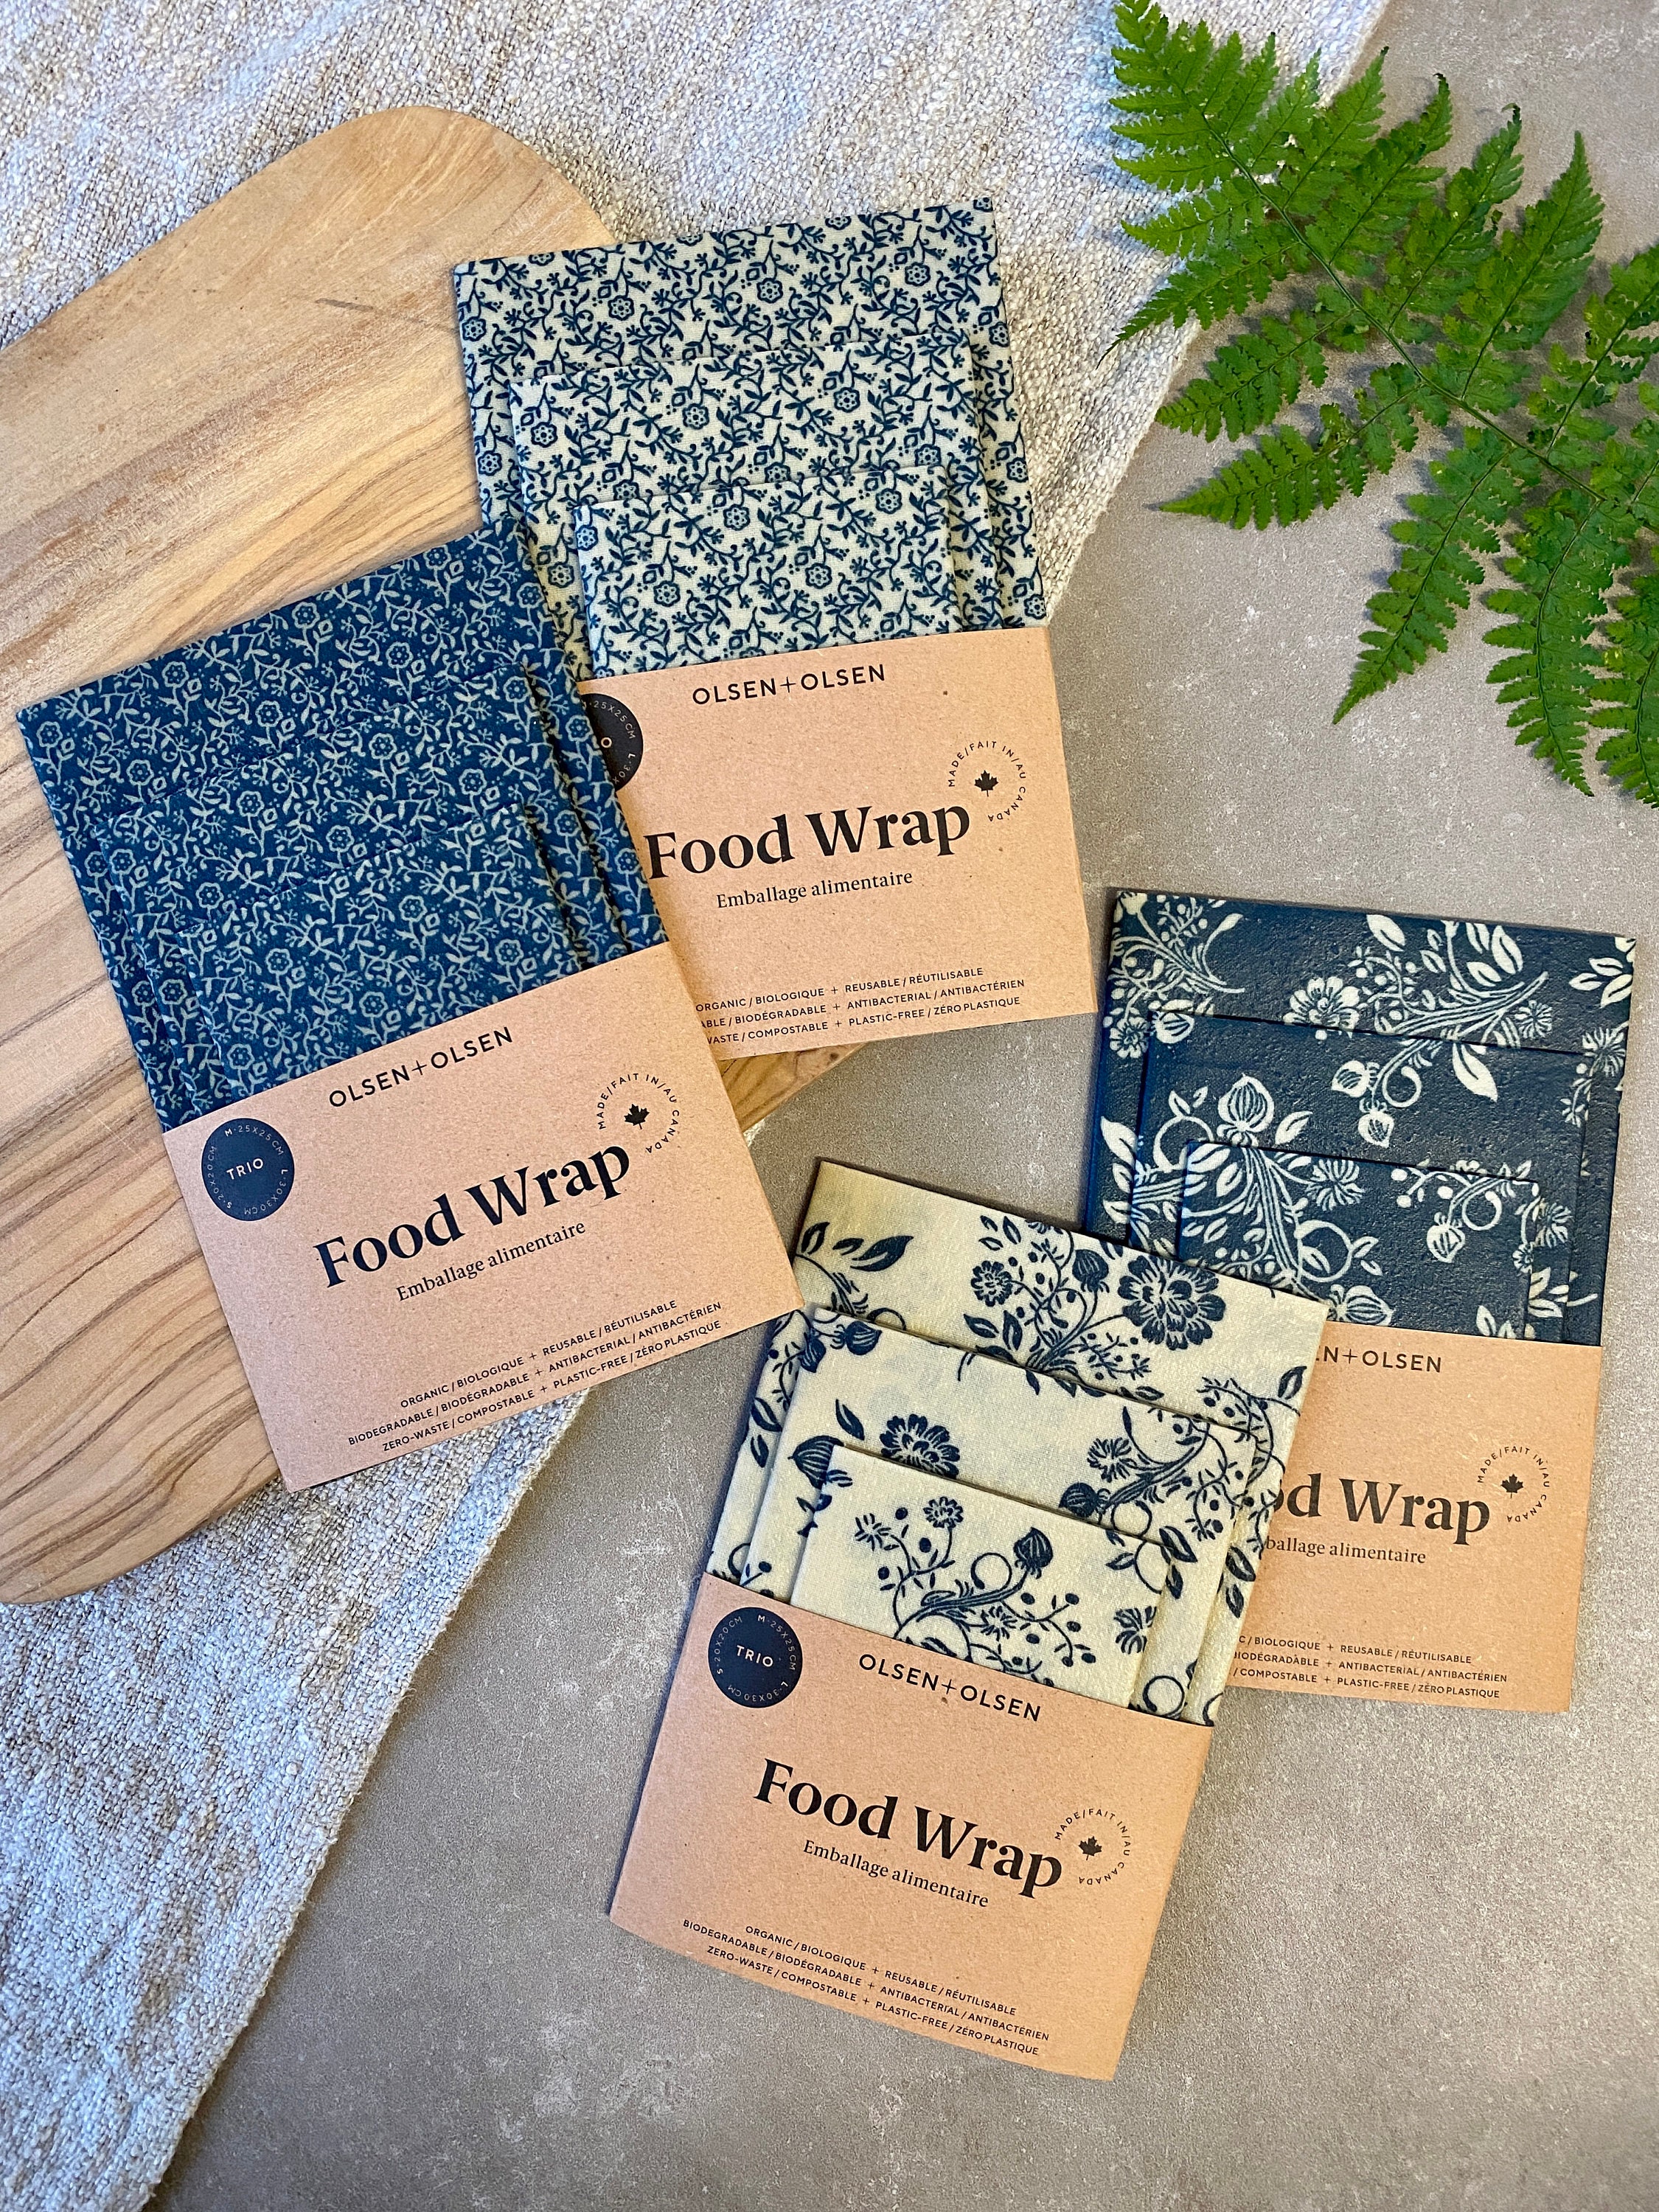 6 Beeswax Food Wrap, Beeswax Sandwich Wrap, Reusable Food Wrap